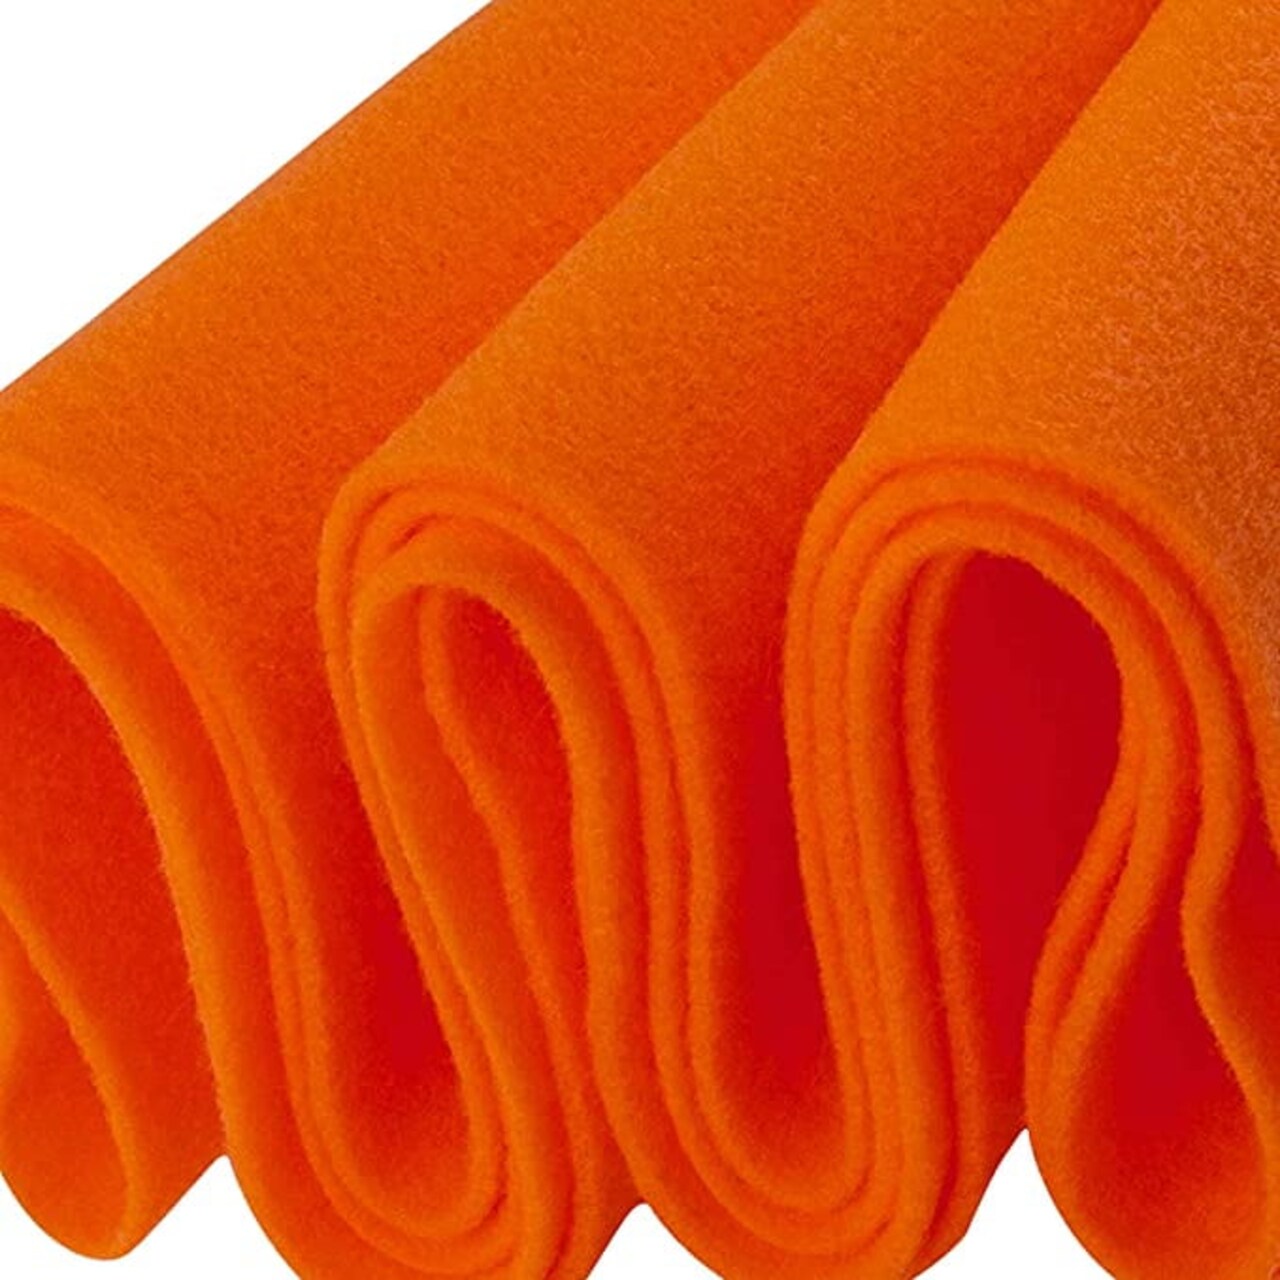 FabricLA Craft Felt Fabric - 36 X 36 Inch Wide & 1.6mm Thick Felt Fabric  - Use This Soft Felt for Crafts - Felt Material Pack - Light Orange A21